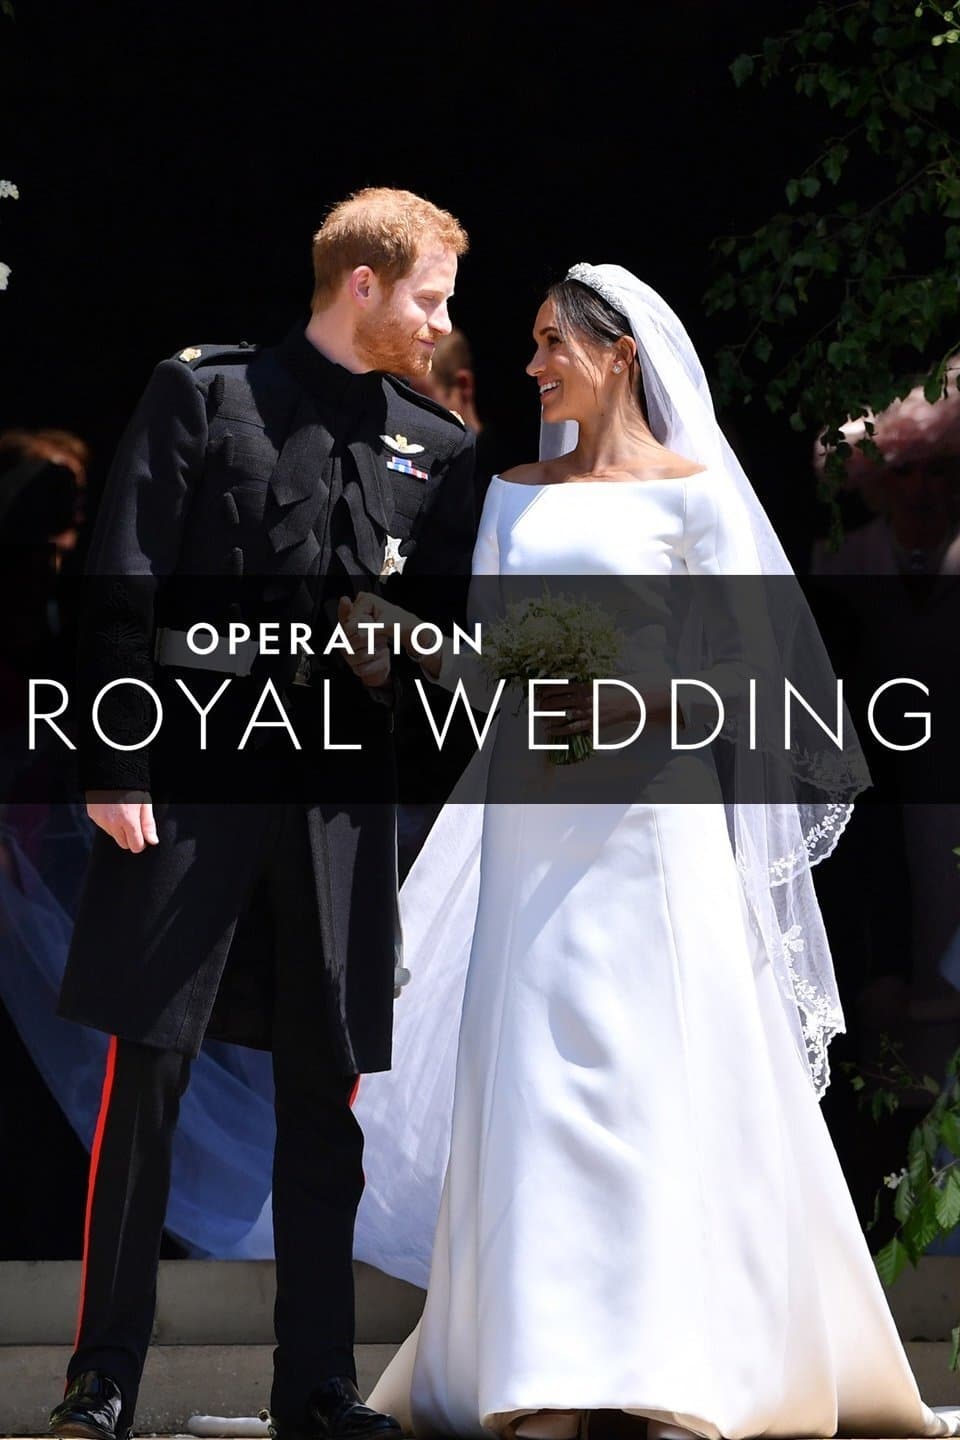 Operation Royal Wedding